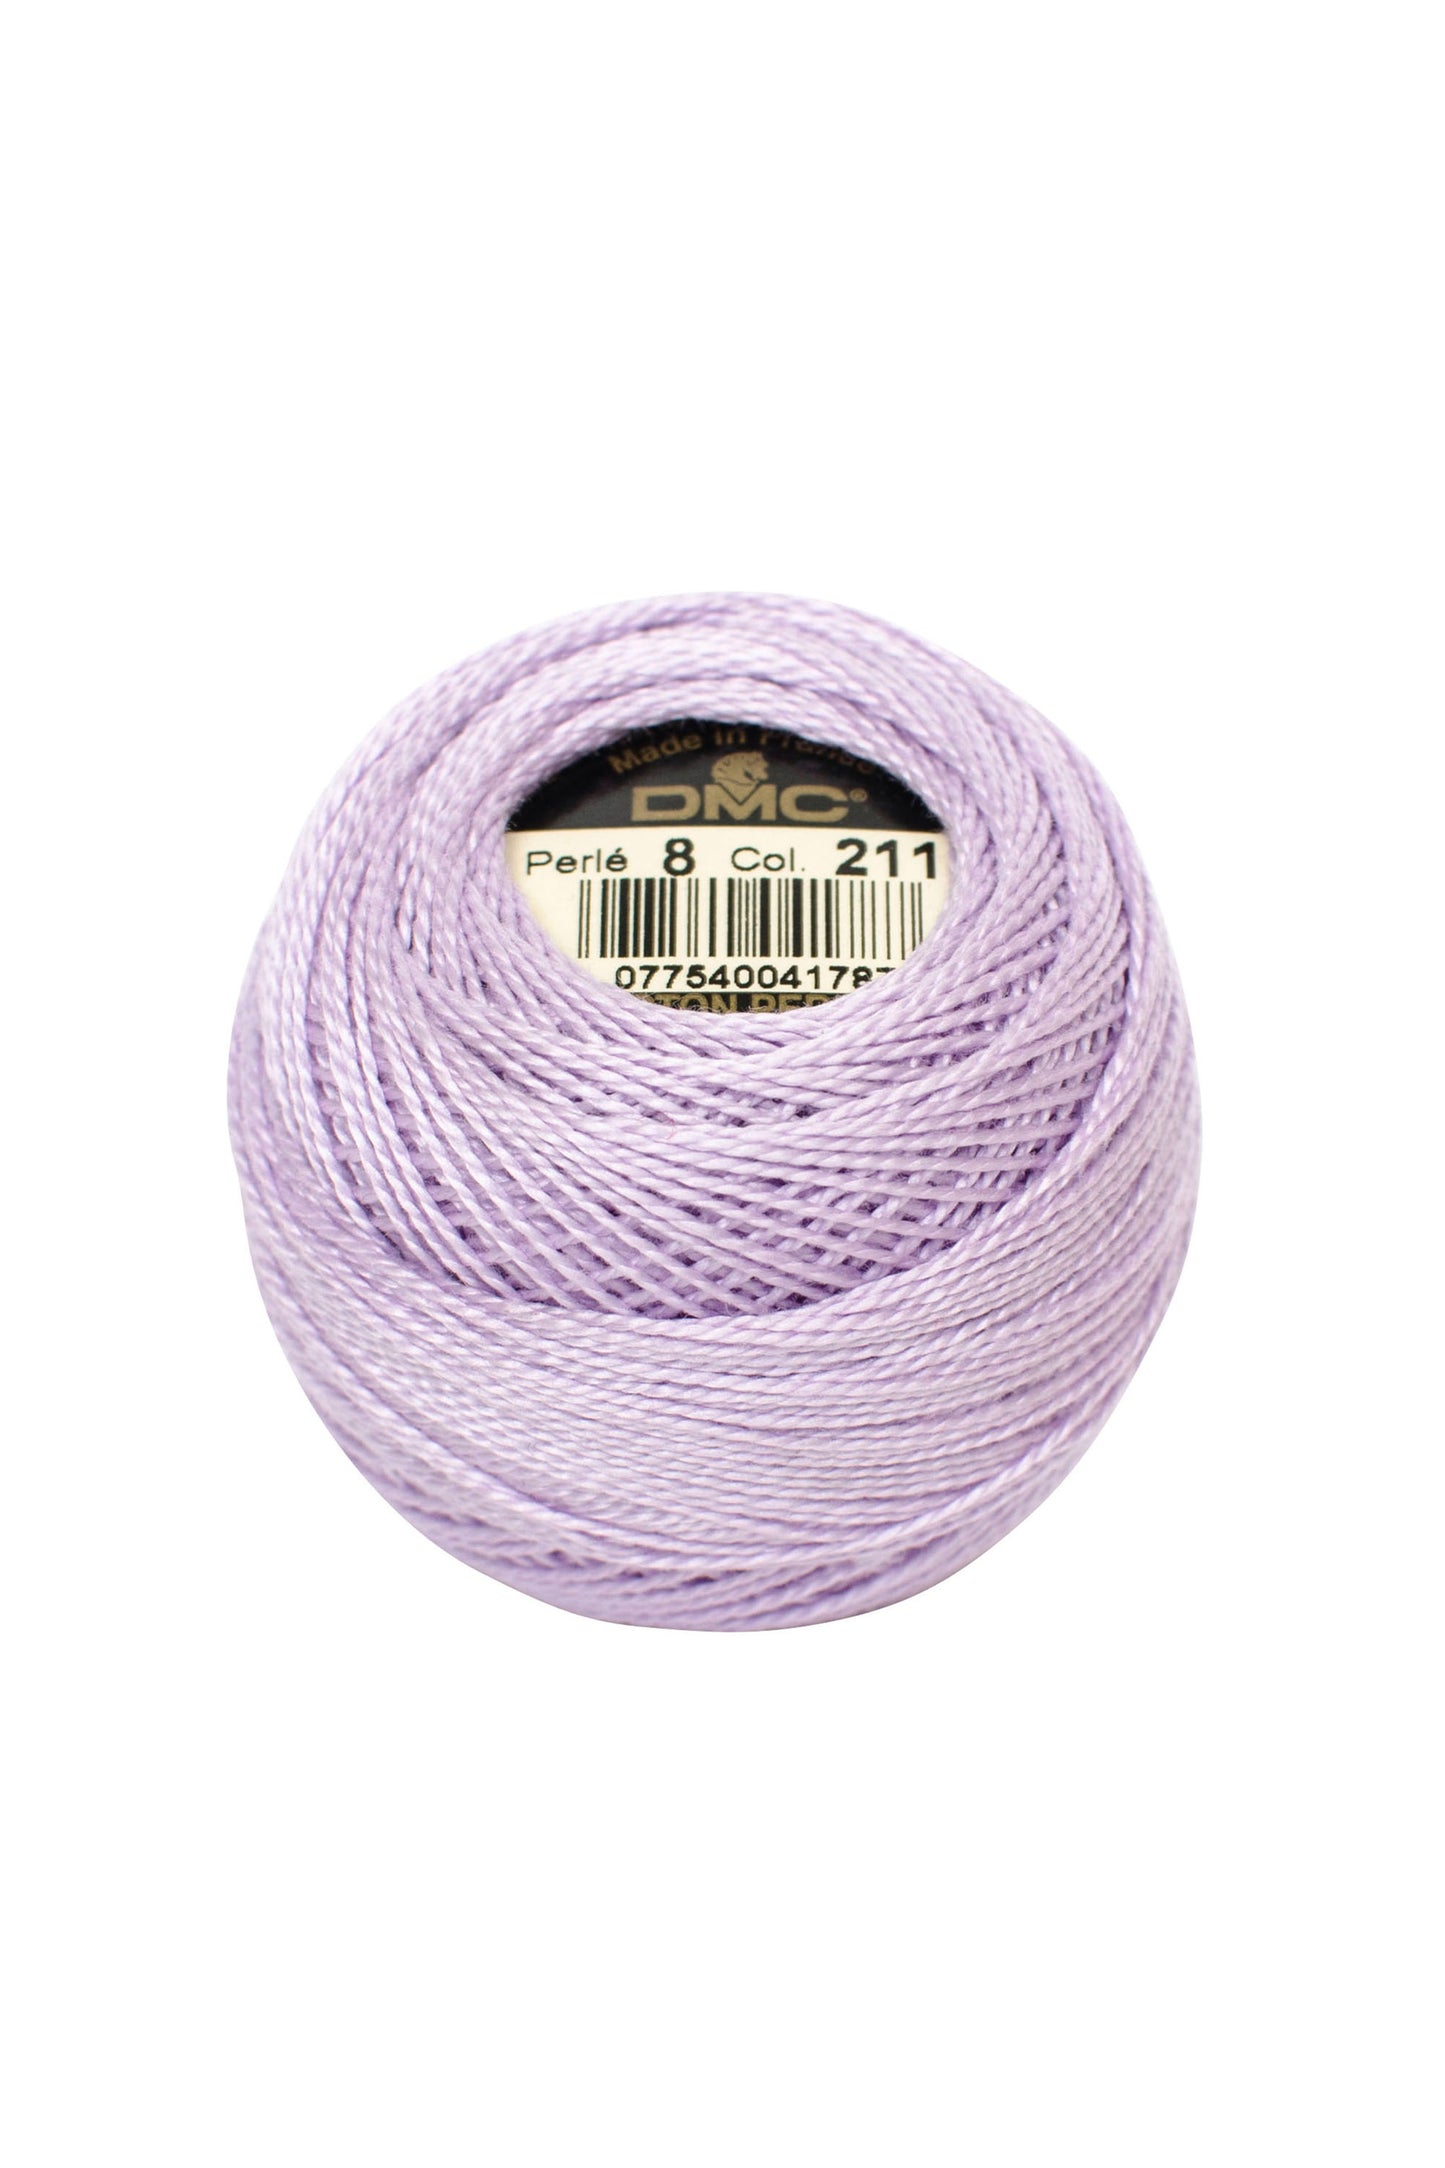 211 Light Lavender - DMC #5 Perle Cotton Ball